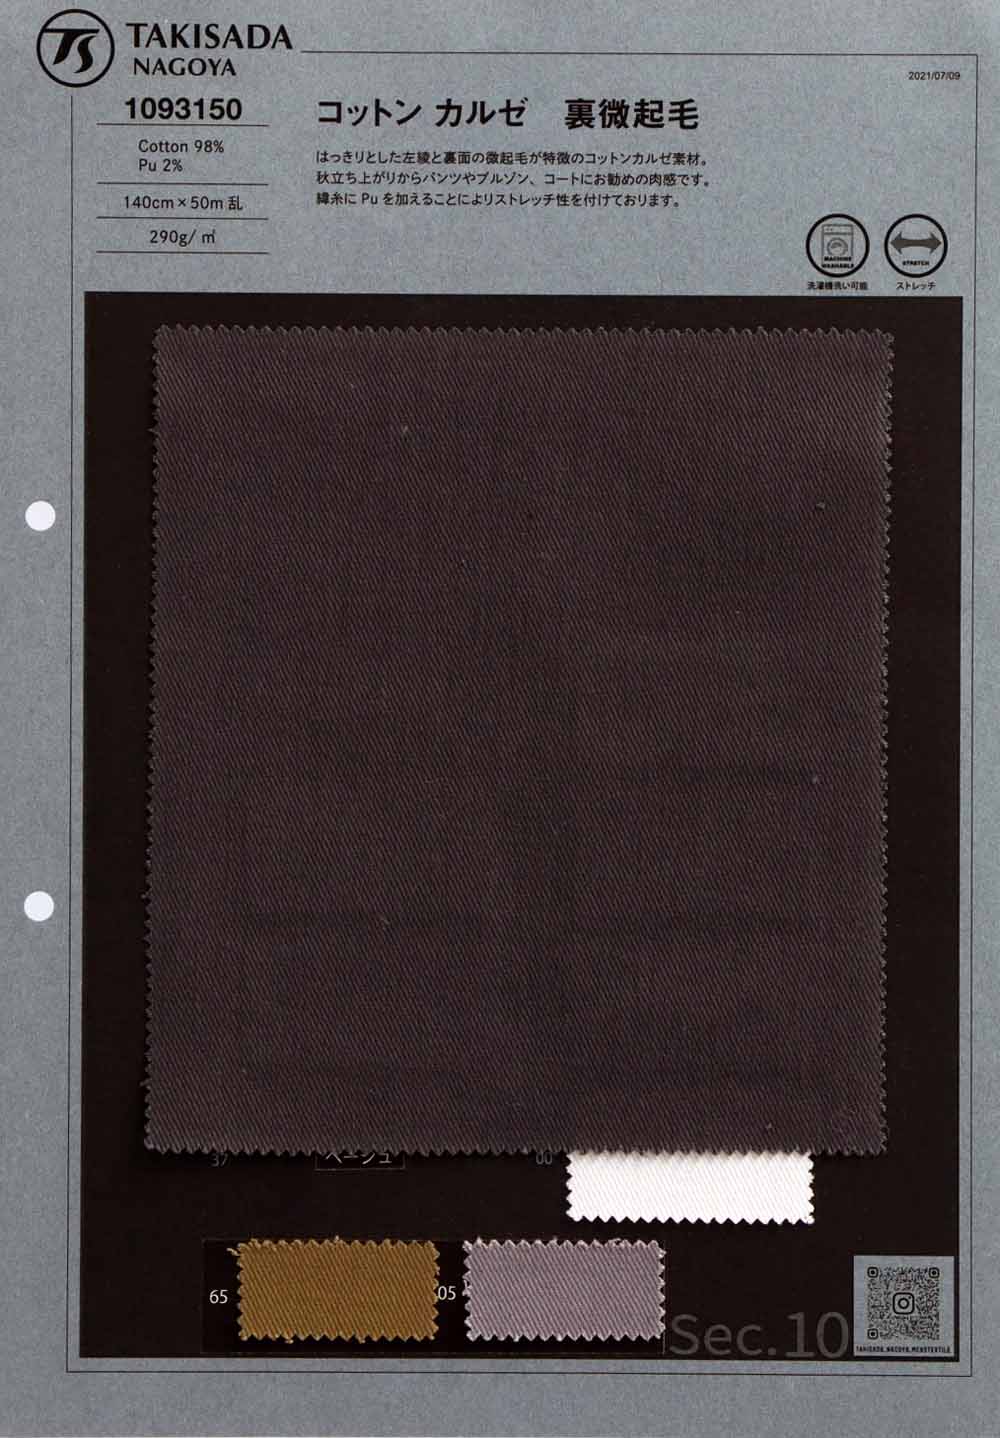 1093150 Dos Finement Fuzzy Cotton Kersey Stretch[Fabrication De Textile] Takisada Nagoya